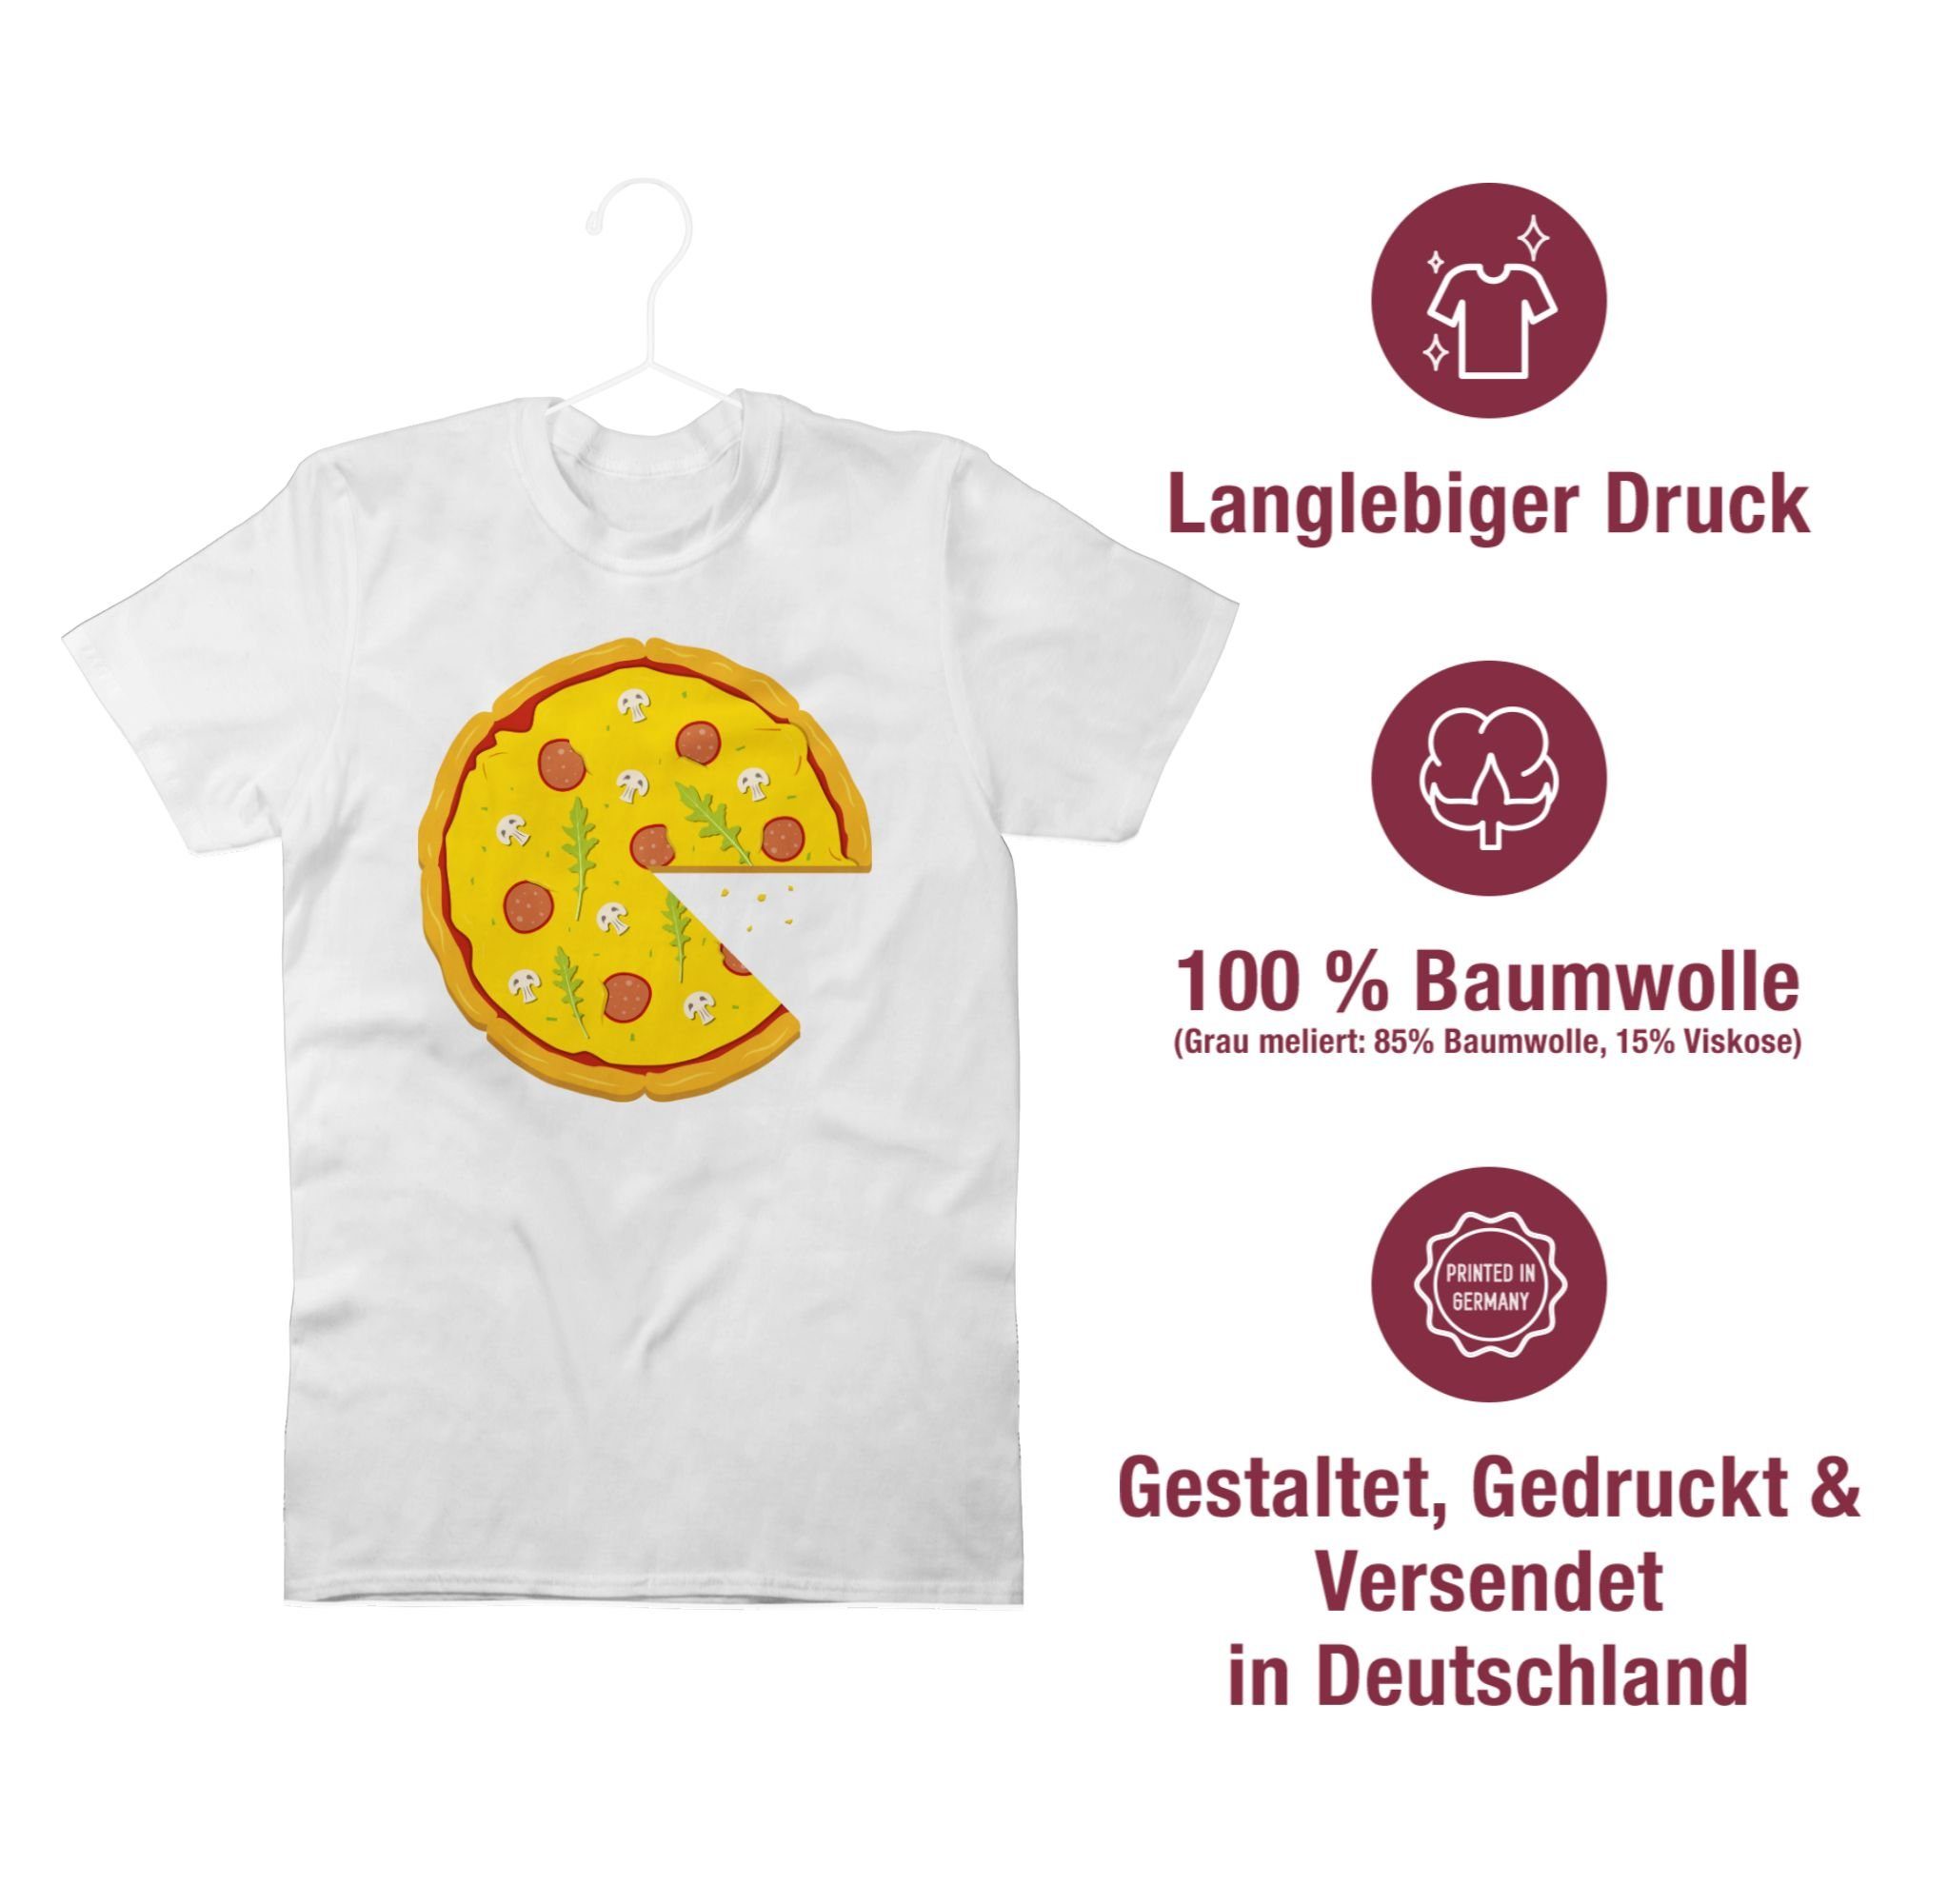 Partner 2 1 Weiß T-Shirt Shirtracer Pärchen Herren Teil Partner-Look Pizza